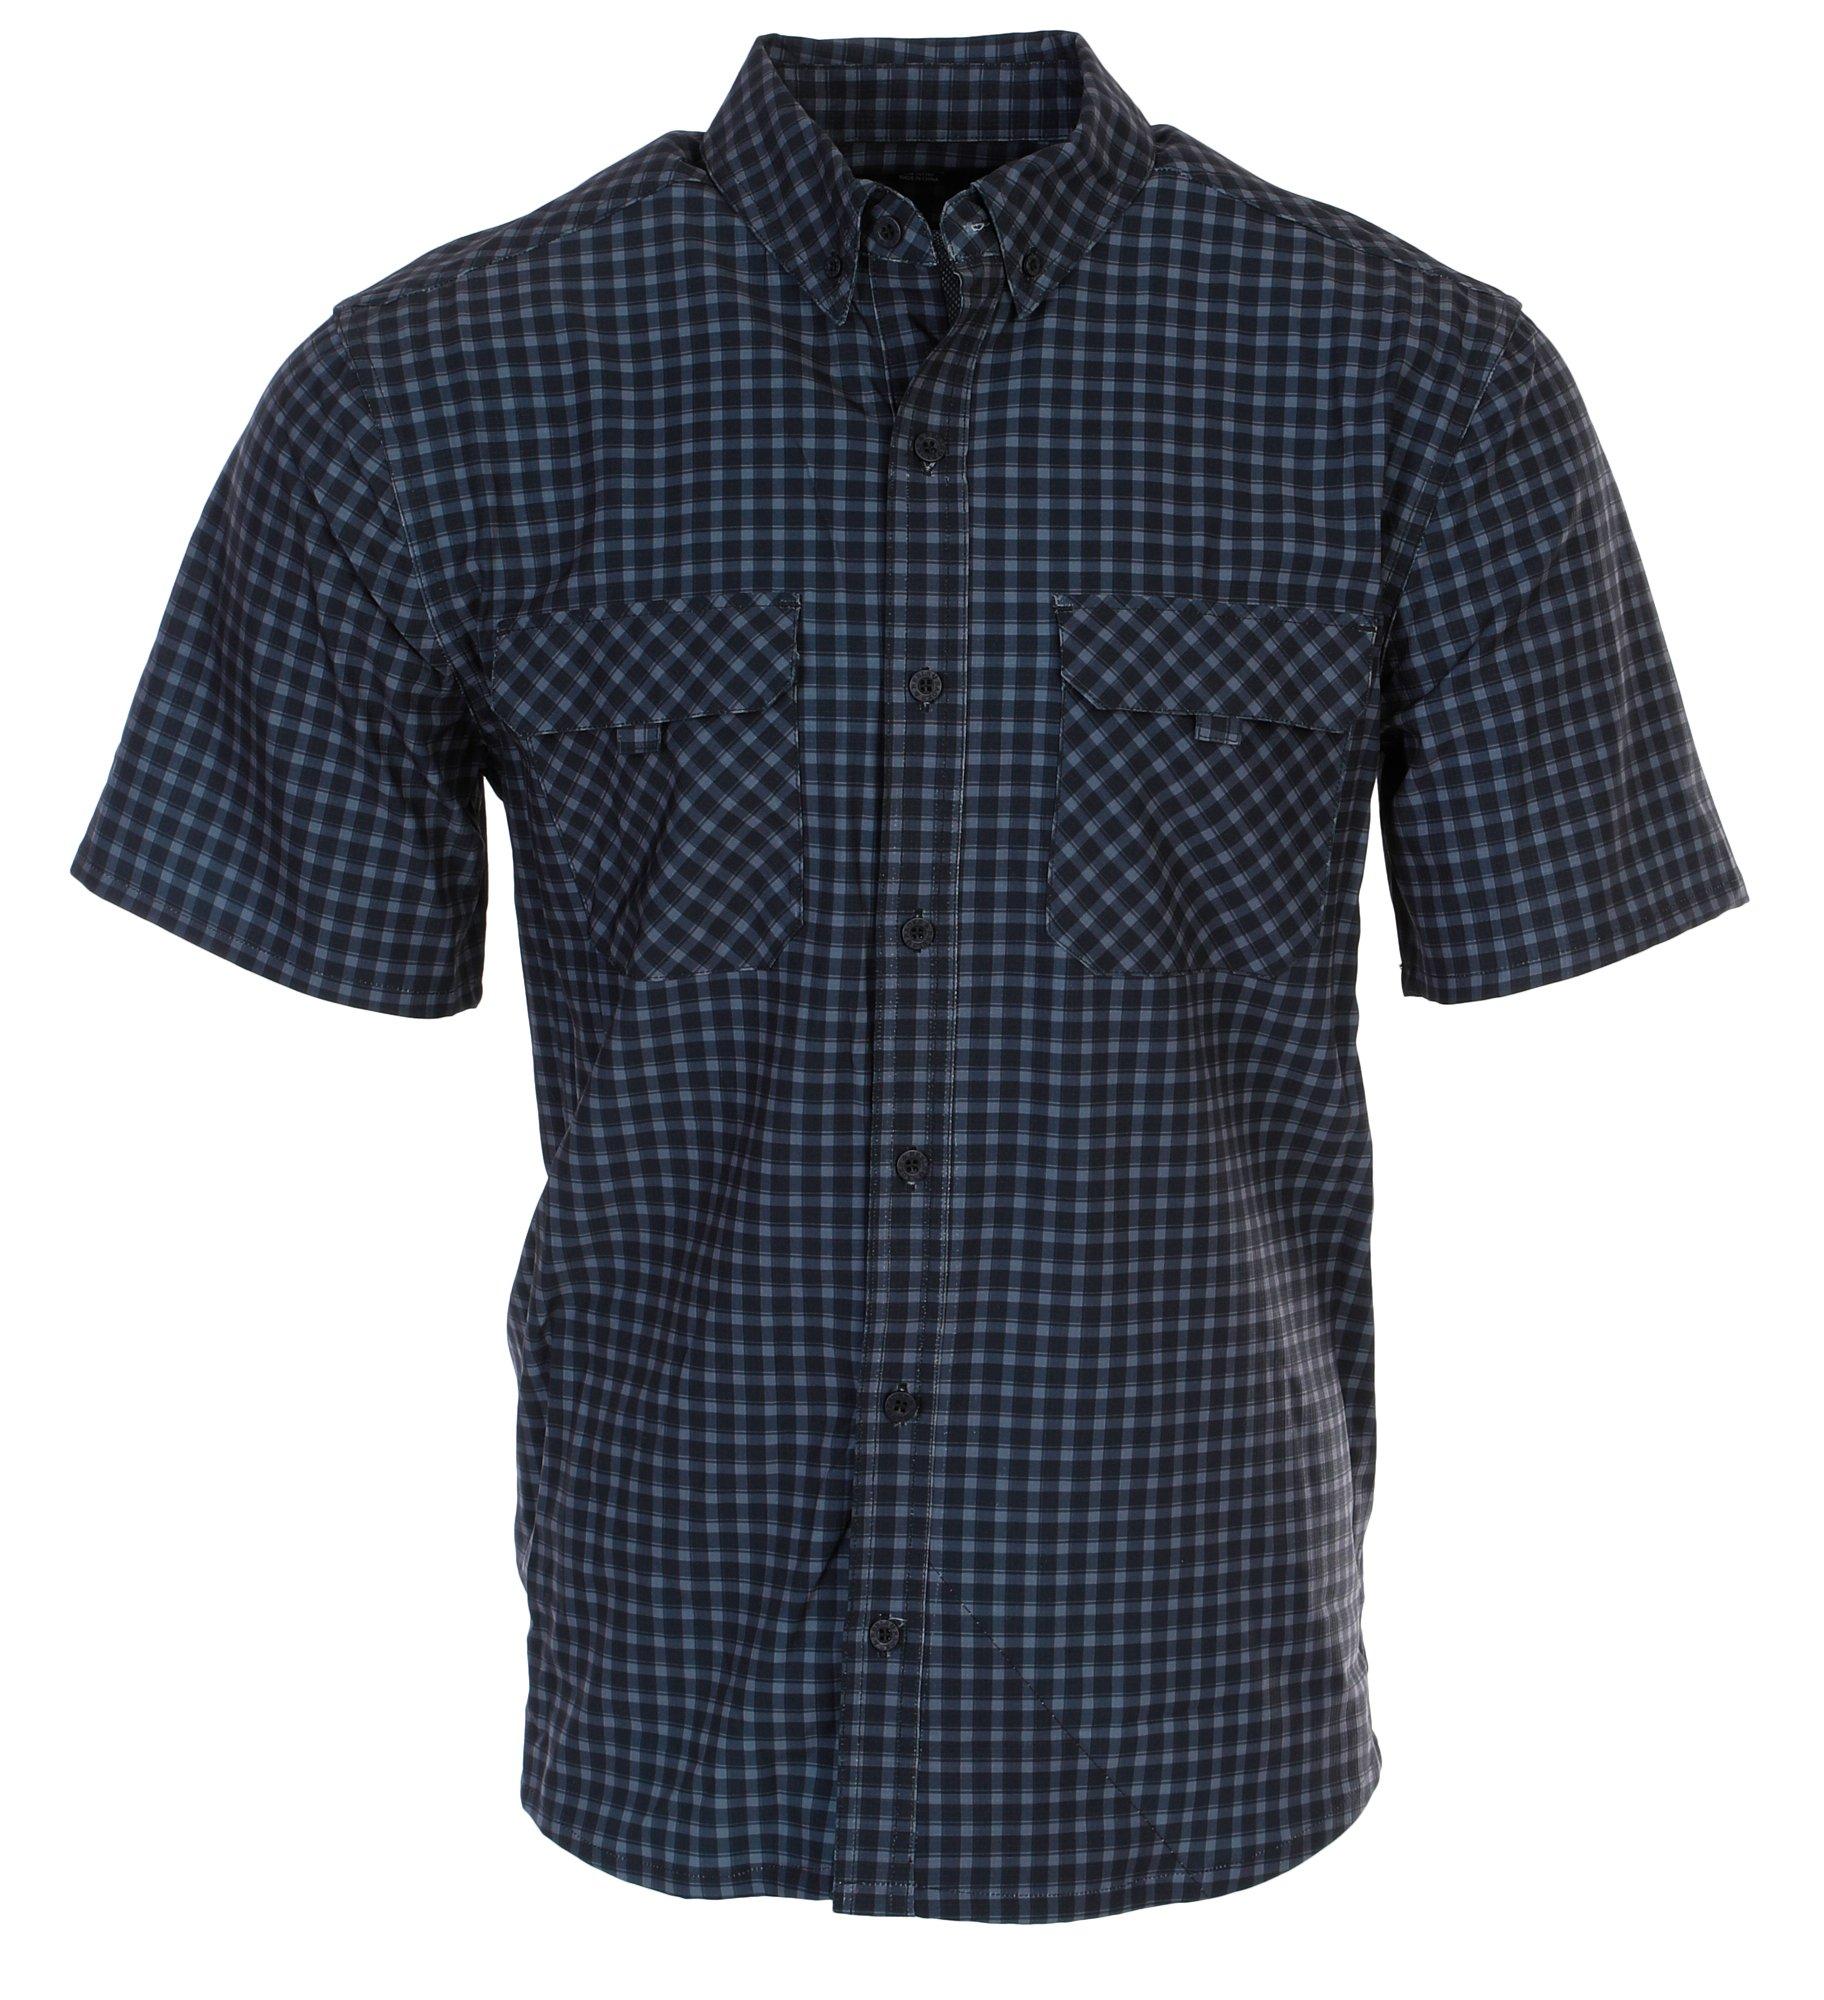 Men's Outdoor Plaid Button Down Shirt